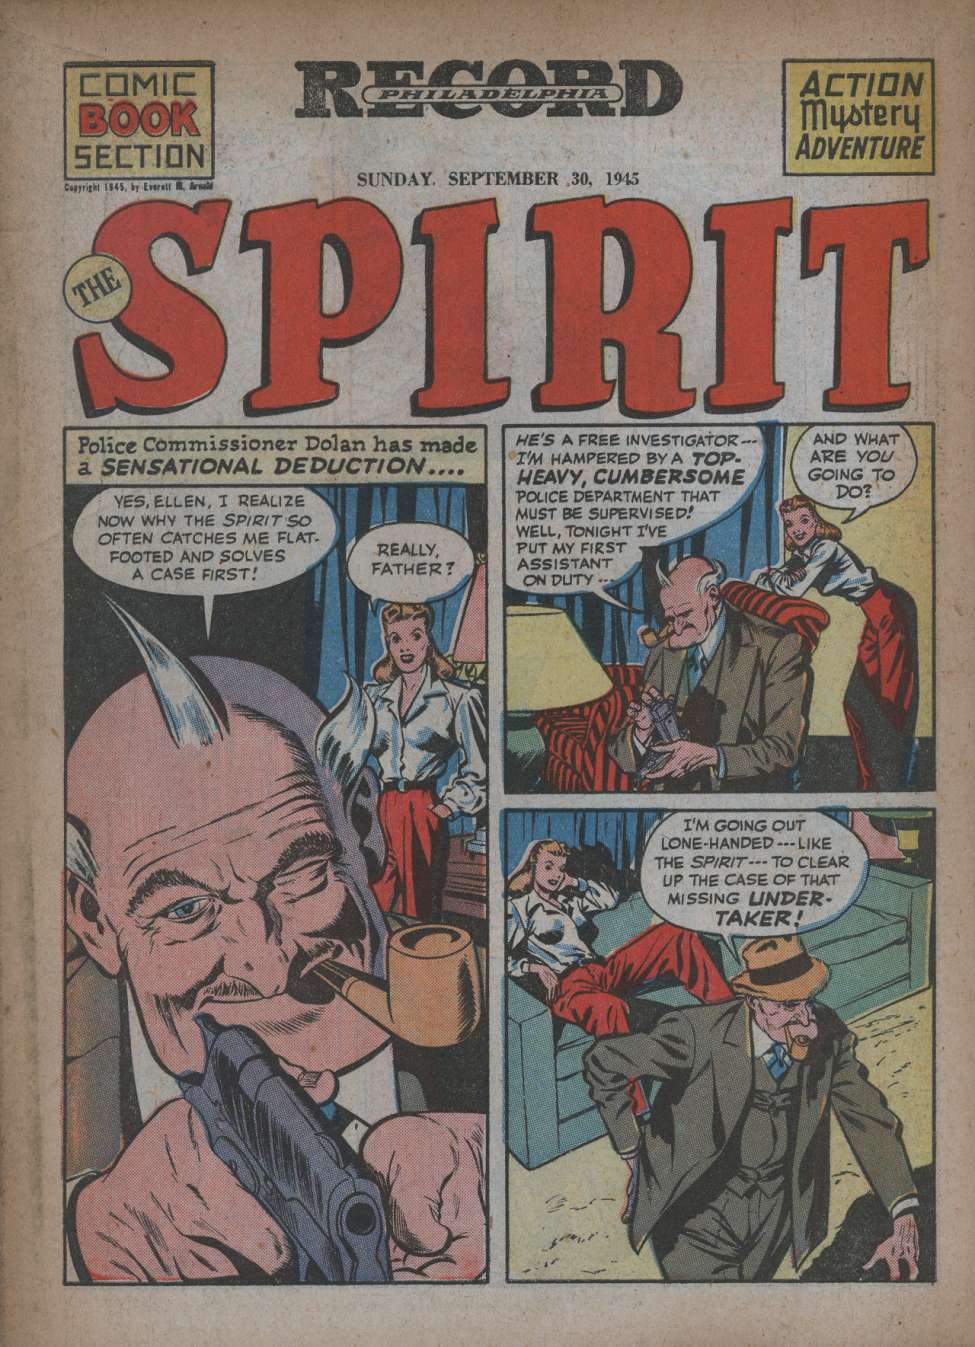 Comic Book Cover For The Spirit (1945-09-30) - Philadelphia Record